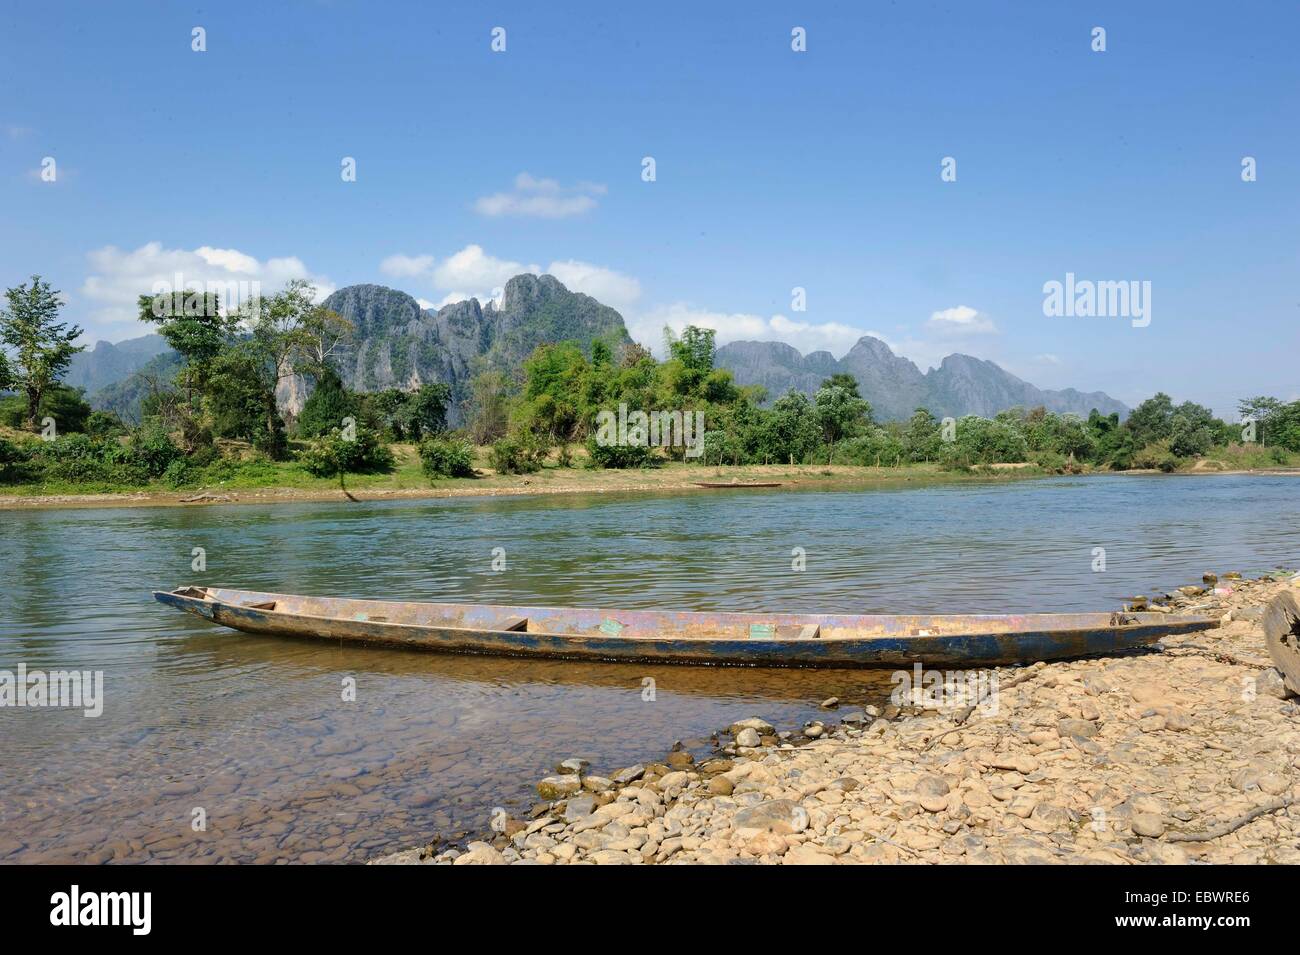 Fishing boat on the Nam Khan River, karst mountains at back, near Vang Vieng, Vientiane Province, Laos Stock Photo